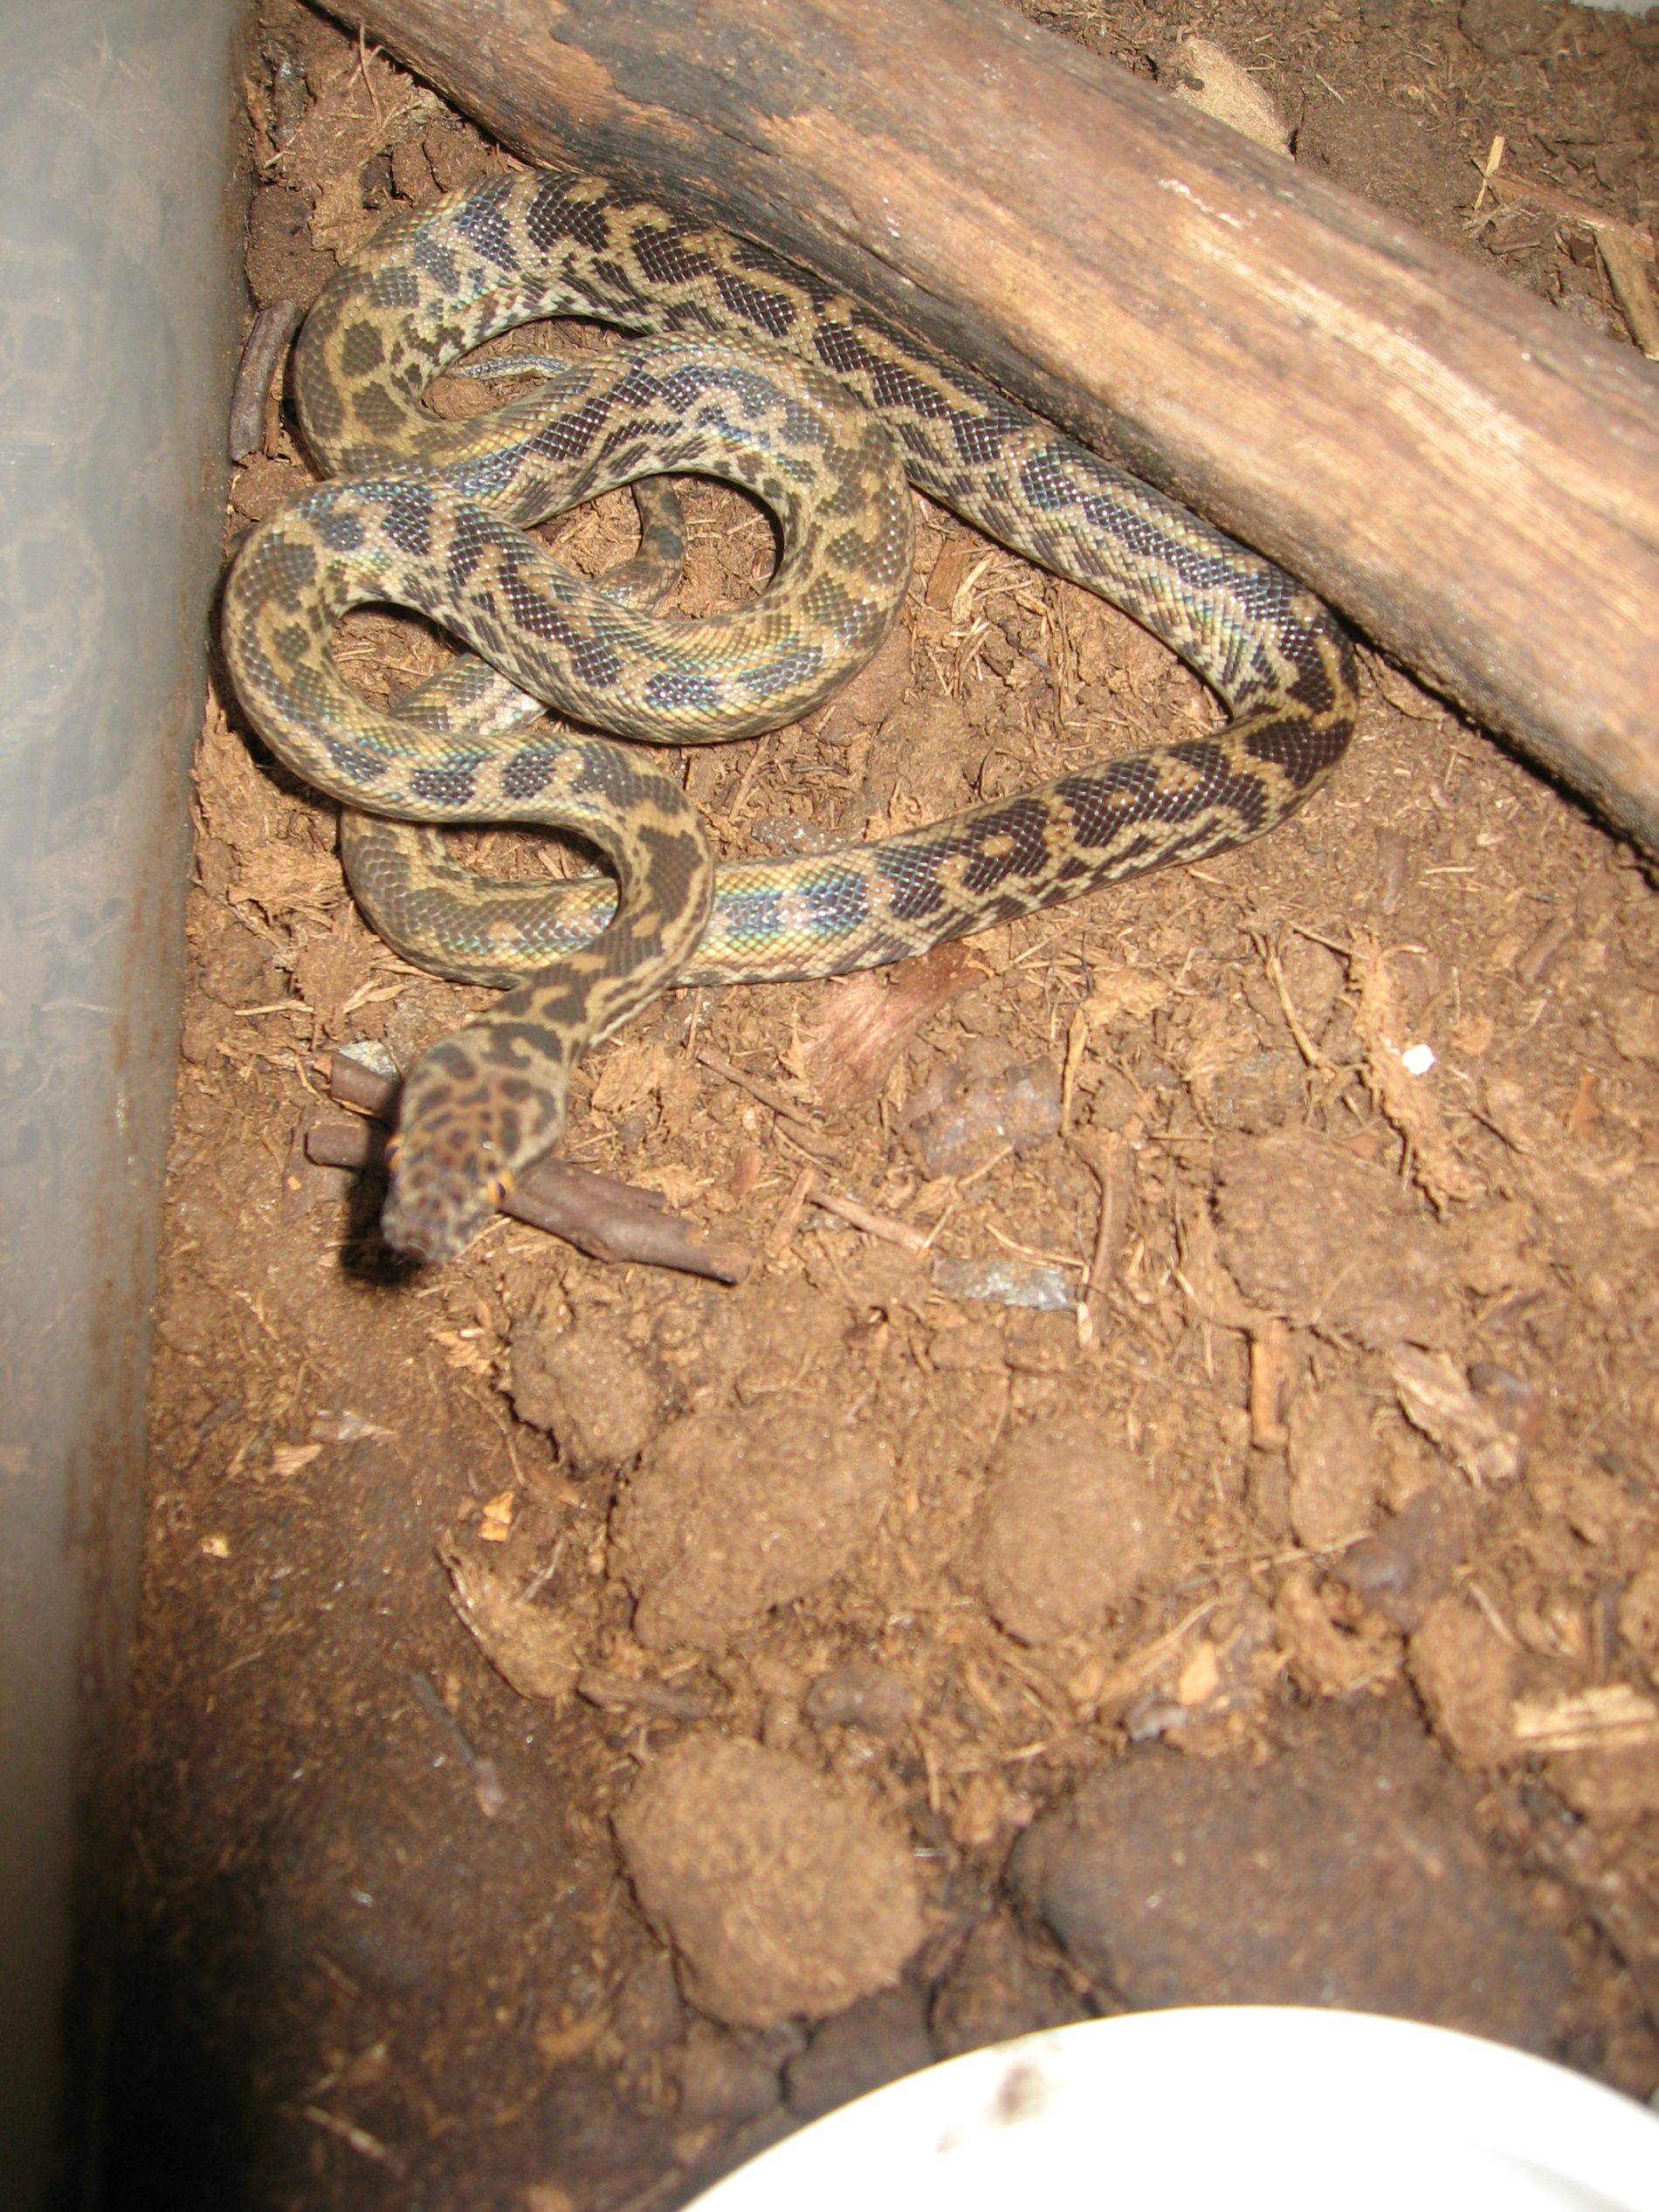 07 - Spotted python.jpg